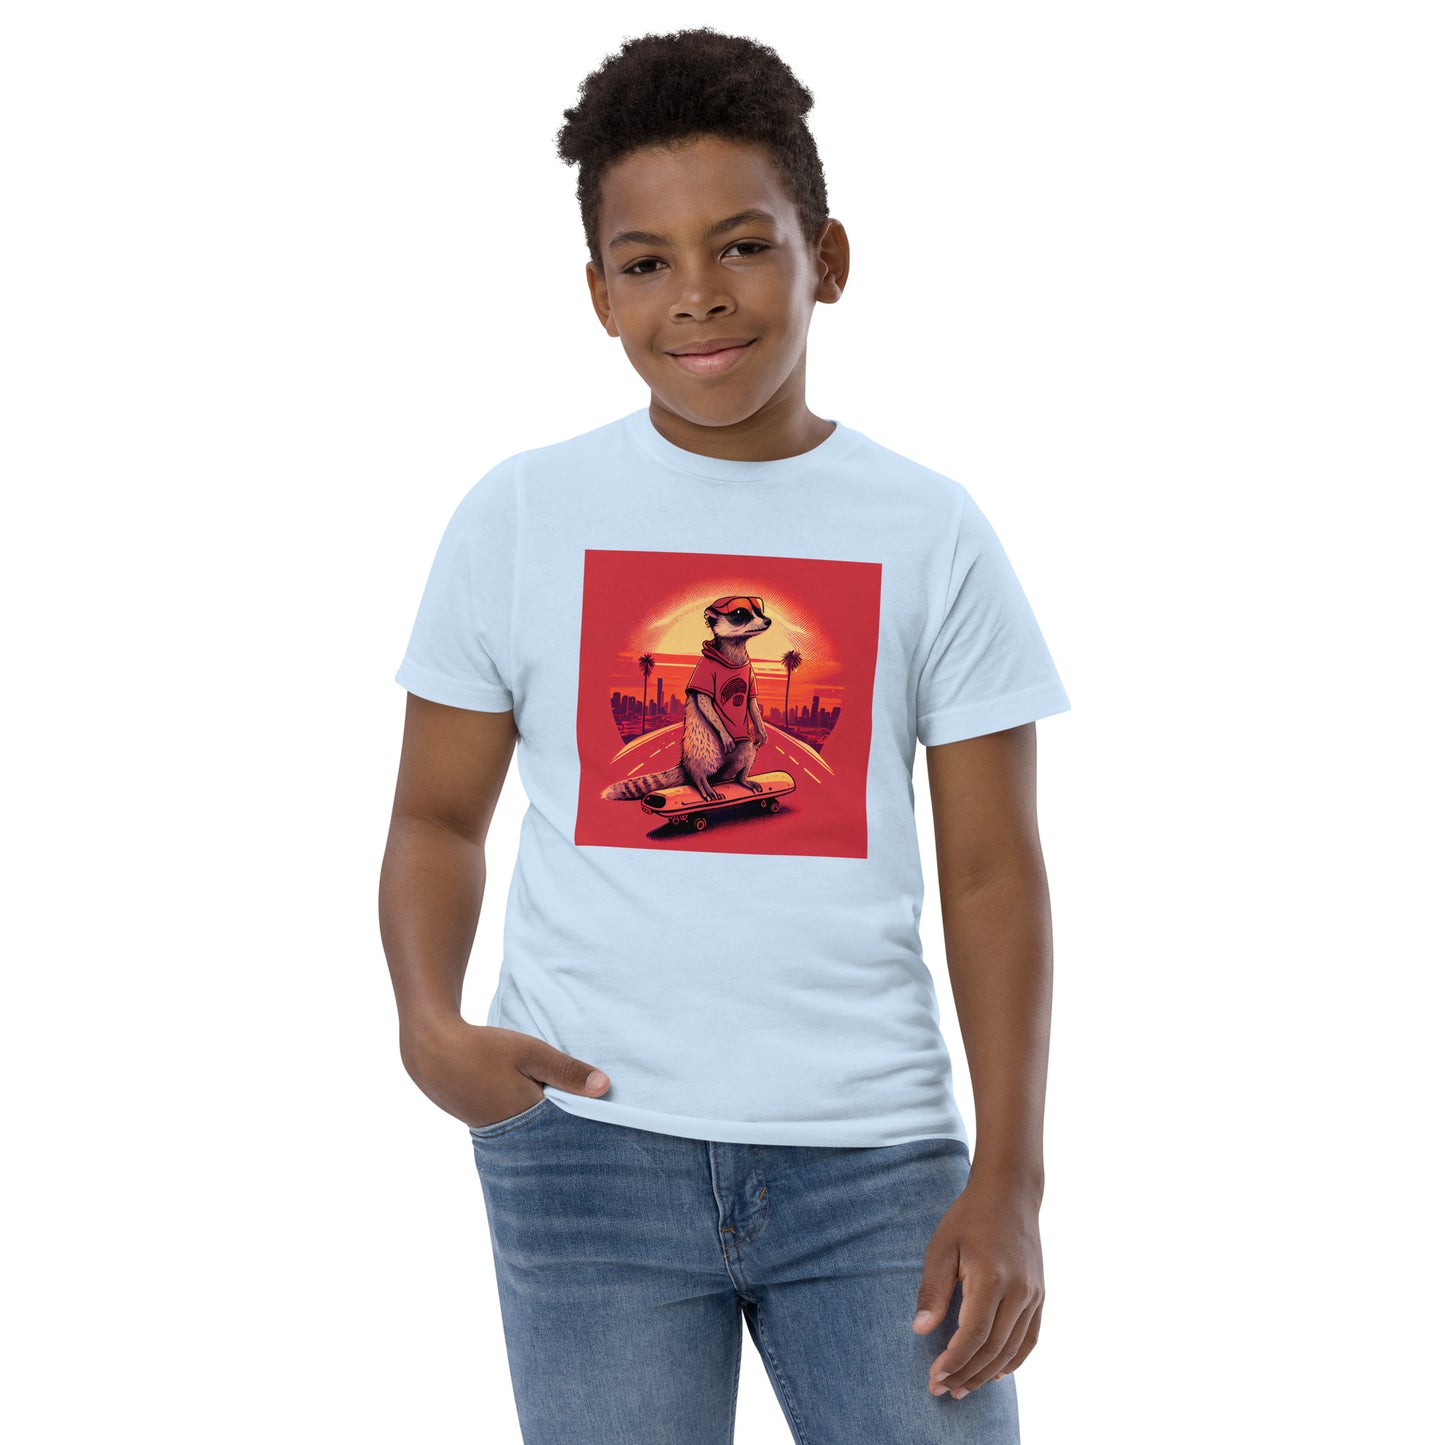 Tobi the Meerkat: Youth jersey t-shirt